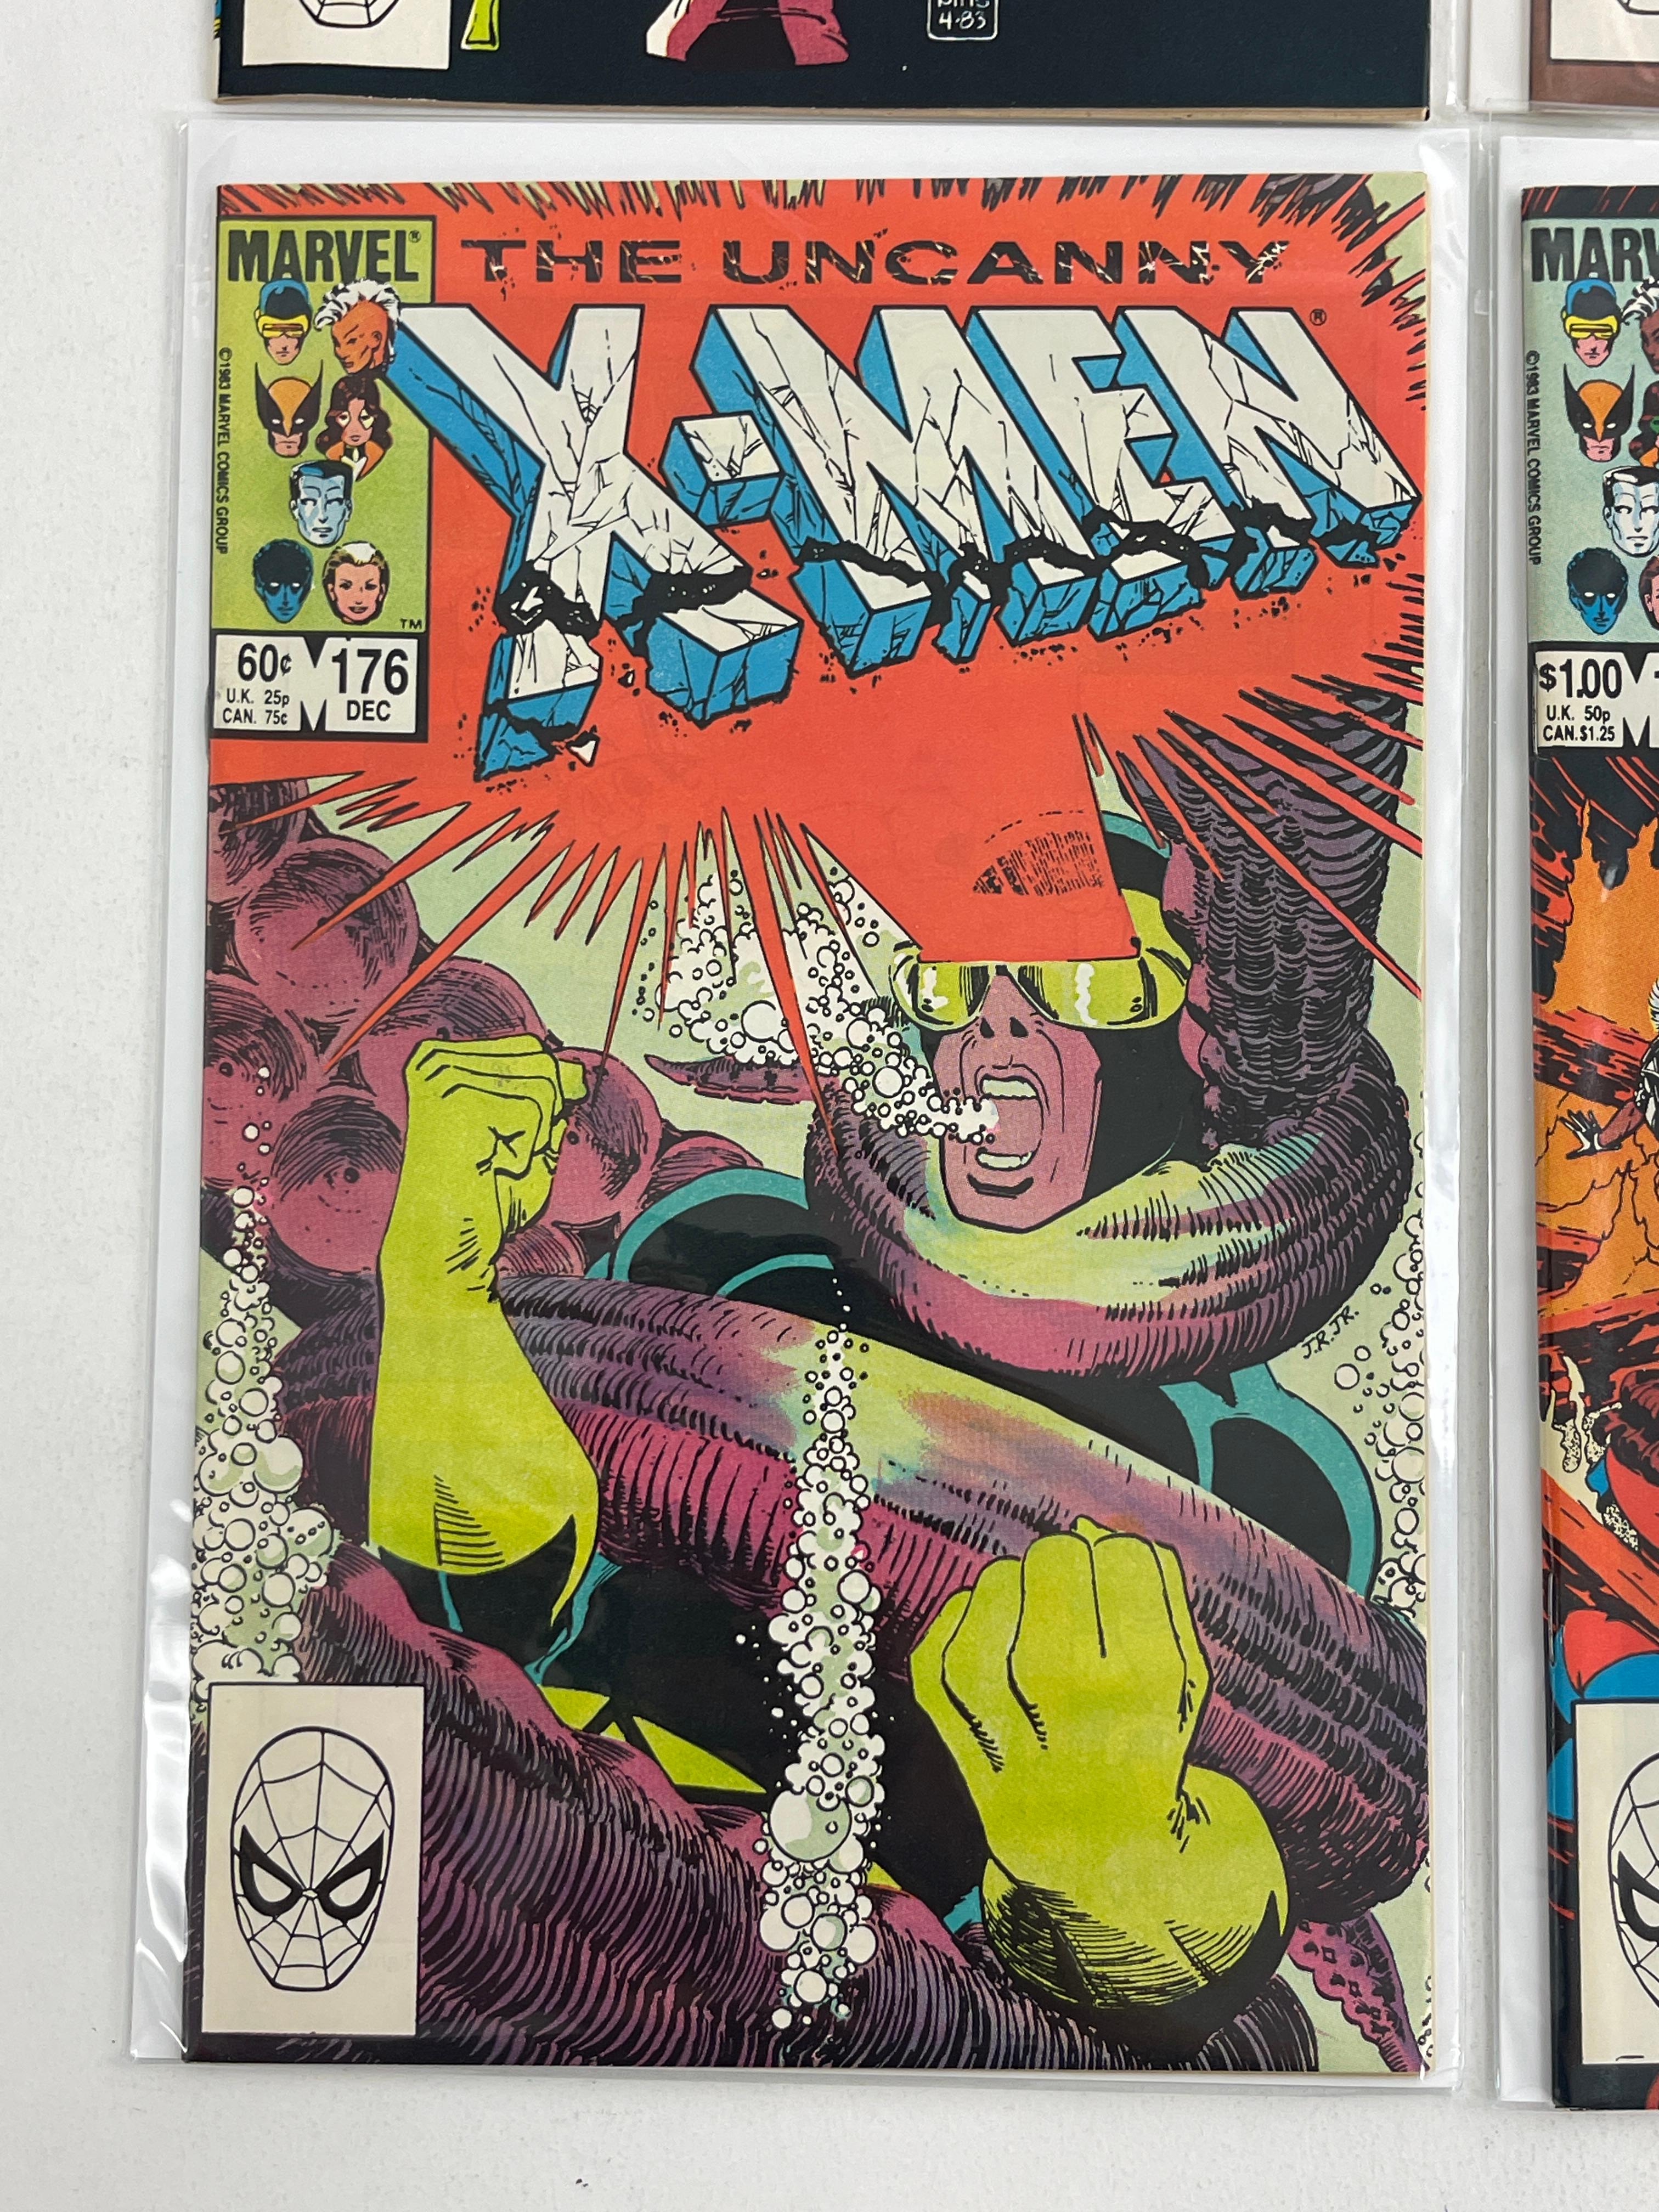 X Men The Uncanny Vintage Marvel Comic Book #173, #174, #174, #176 Collection Lot of 4